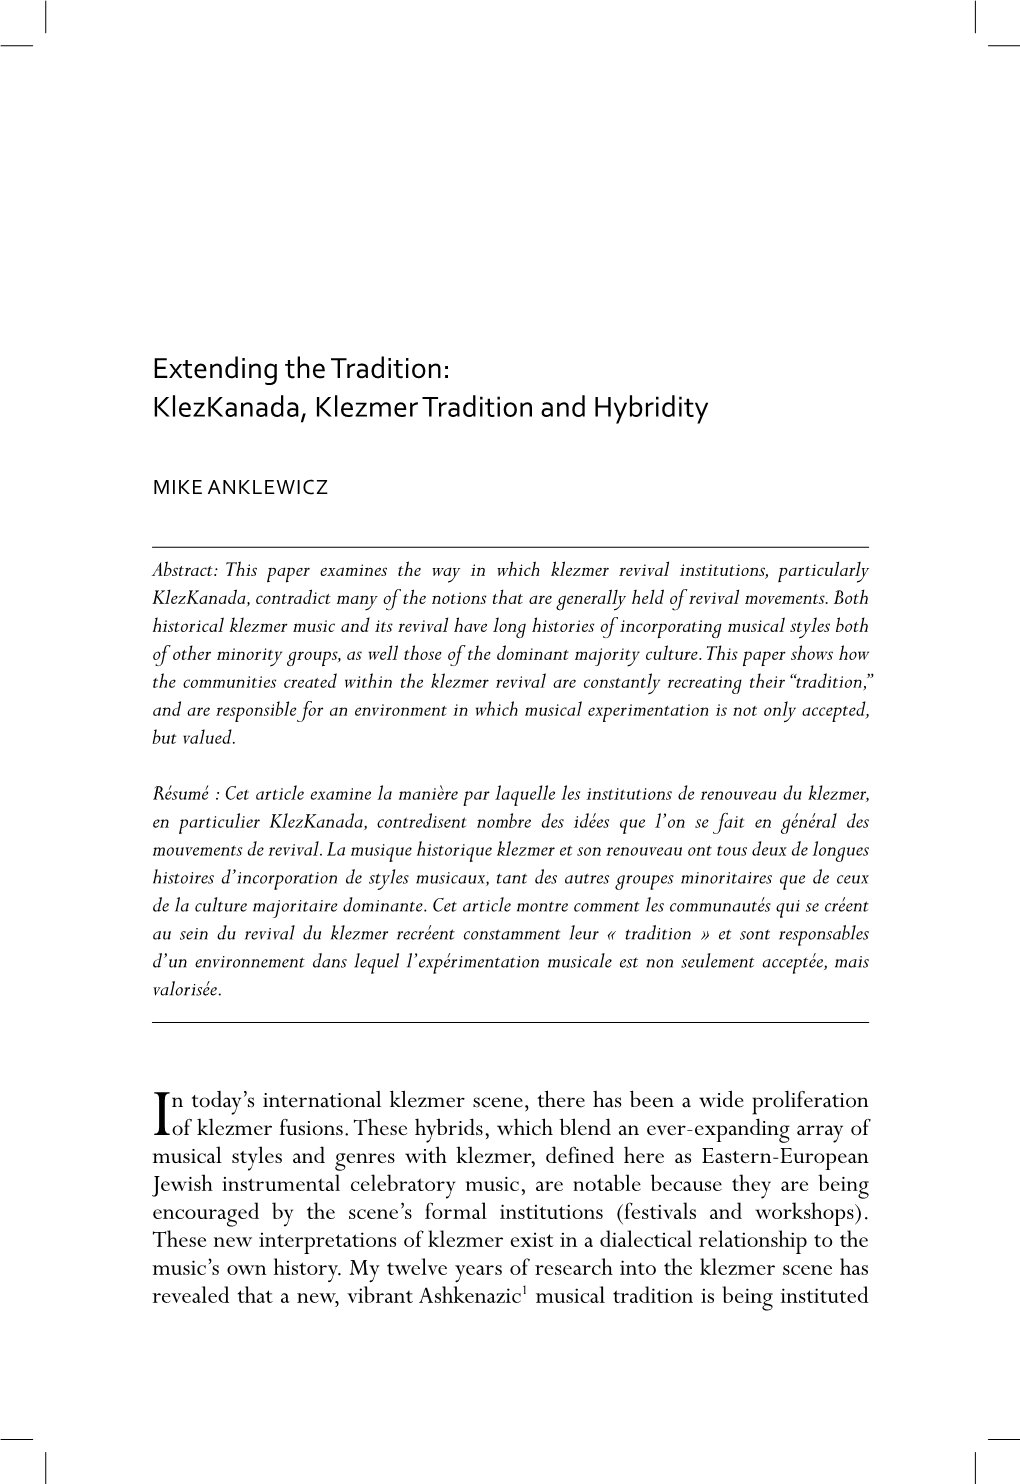 Extending the Tradition: Klezkanada, Klezmer Tradition and Hybridity